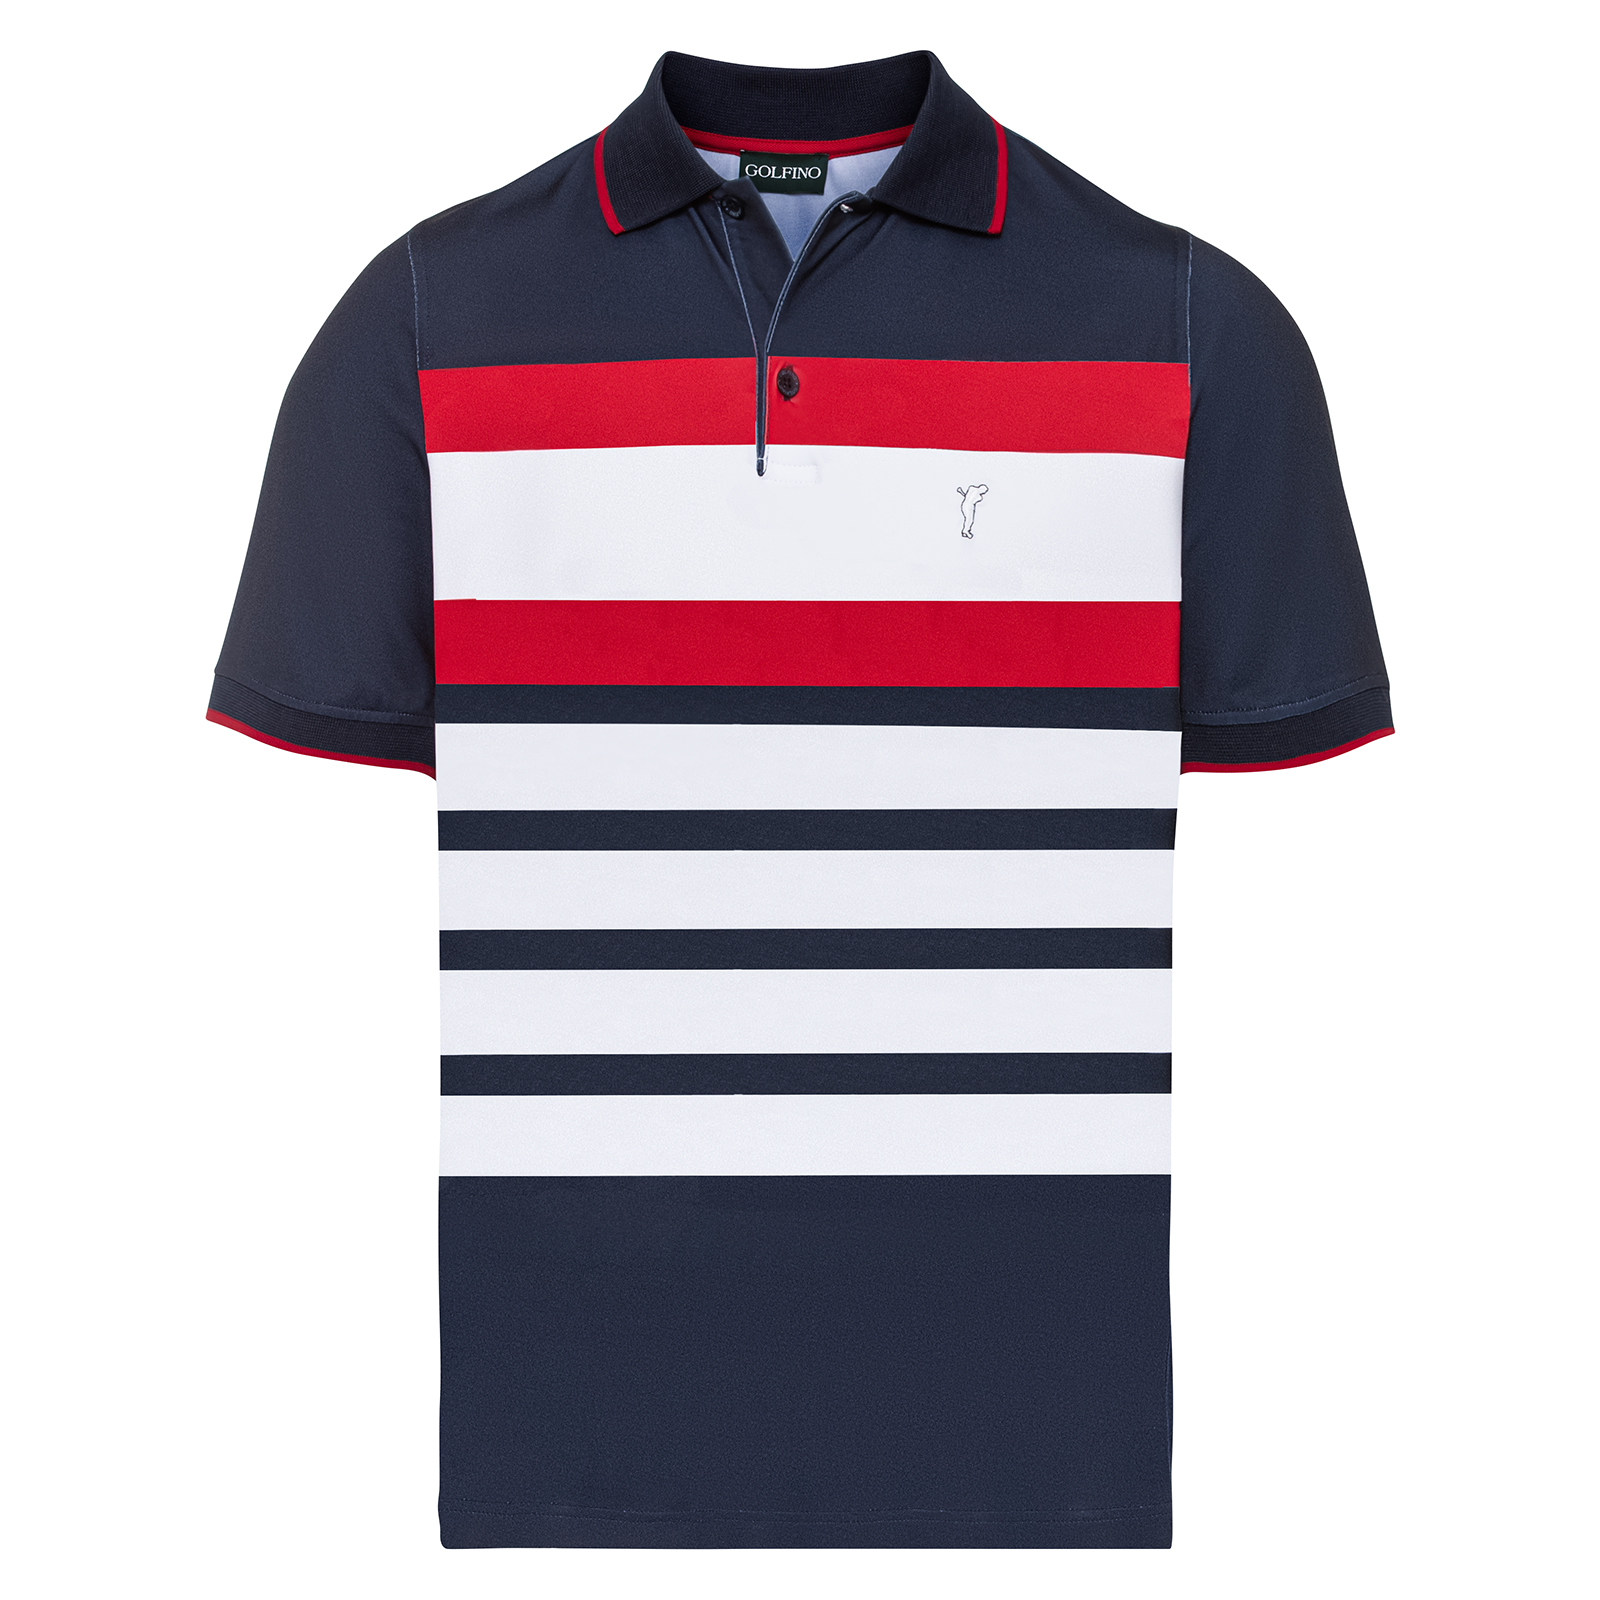 Men's striped stretch golf polo shirt